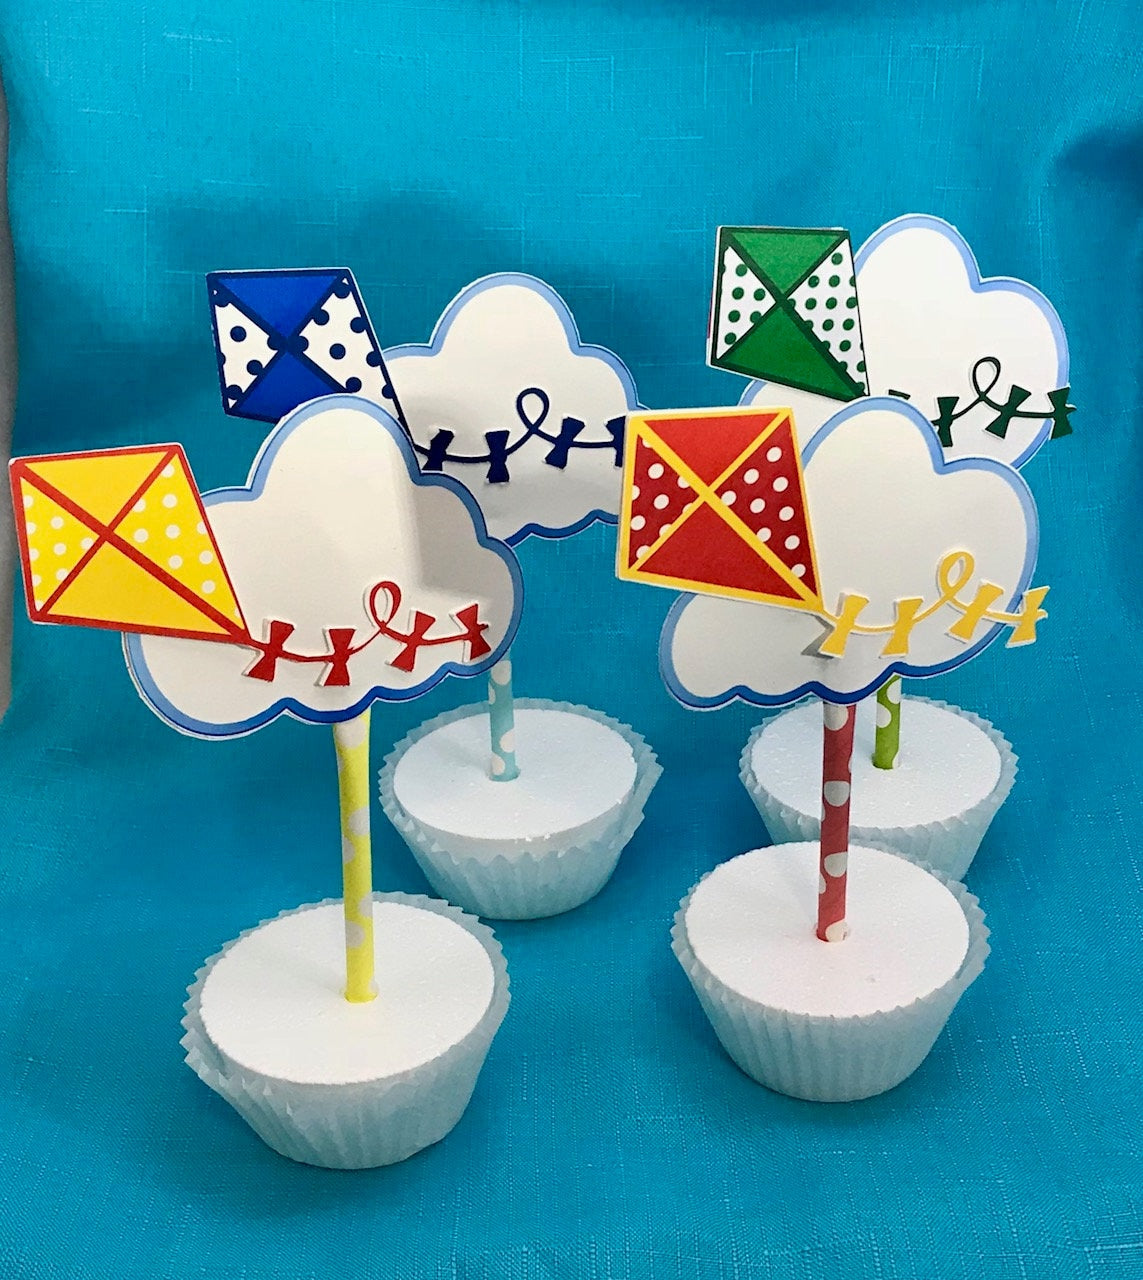 kite cupcake toppers -set of 12 /cupcake topper kite/colorful straws